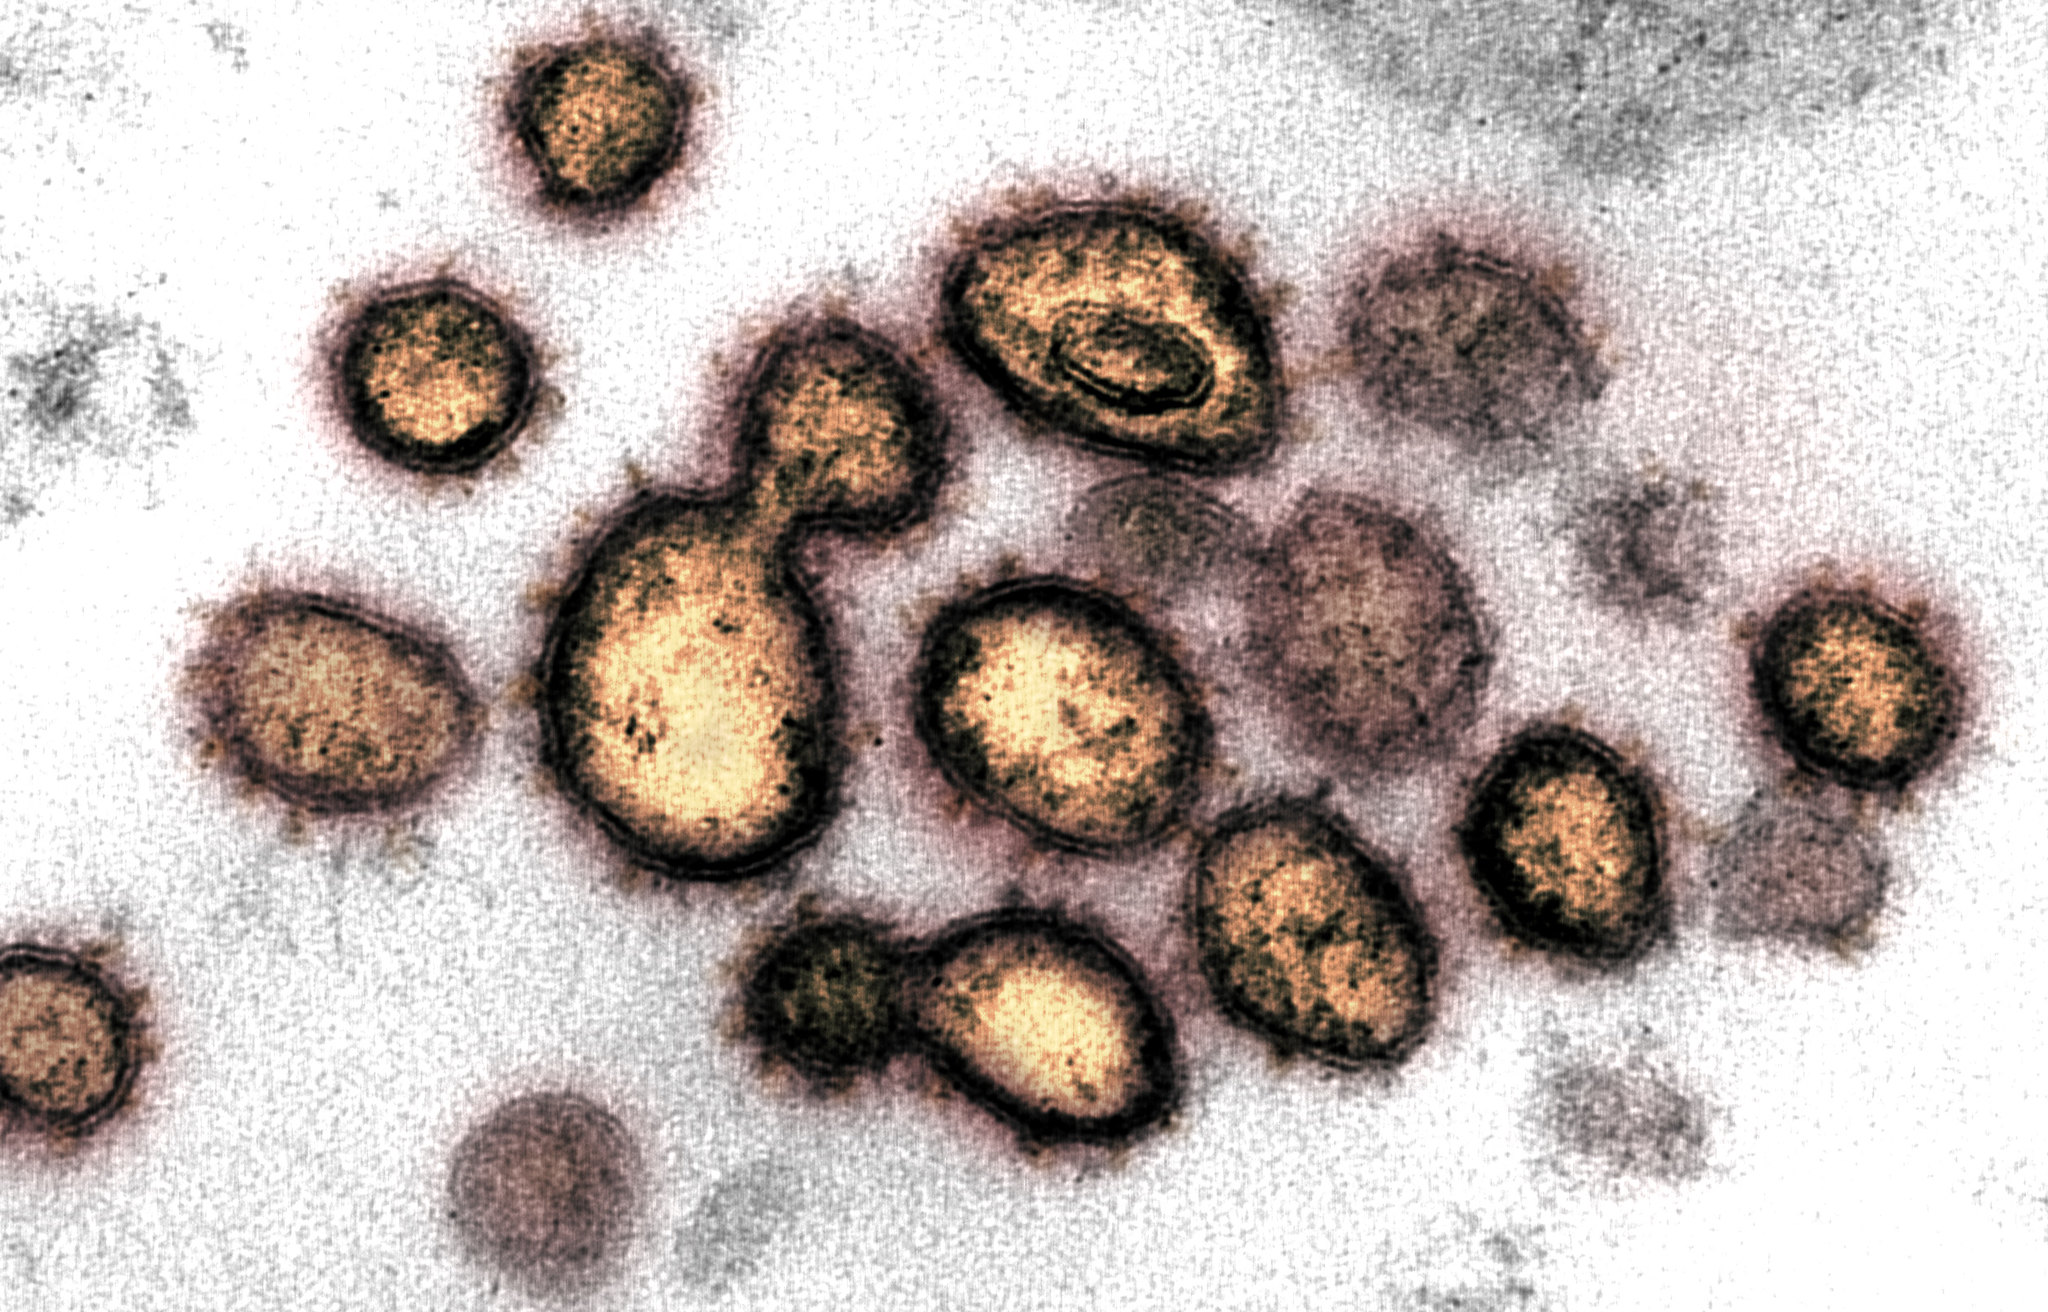 New coronavirus variant spreading in Britain – UK SMC Expert Reaction